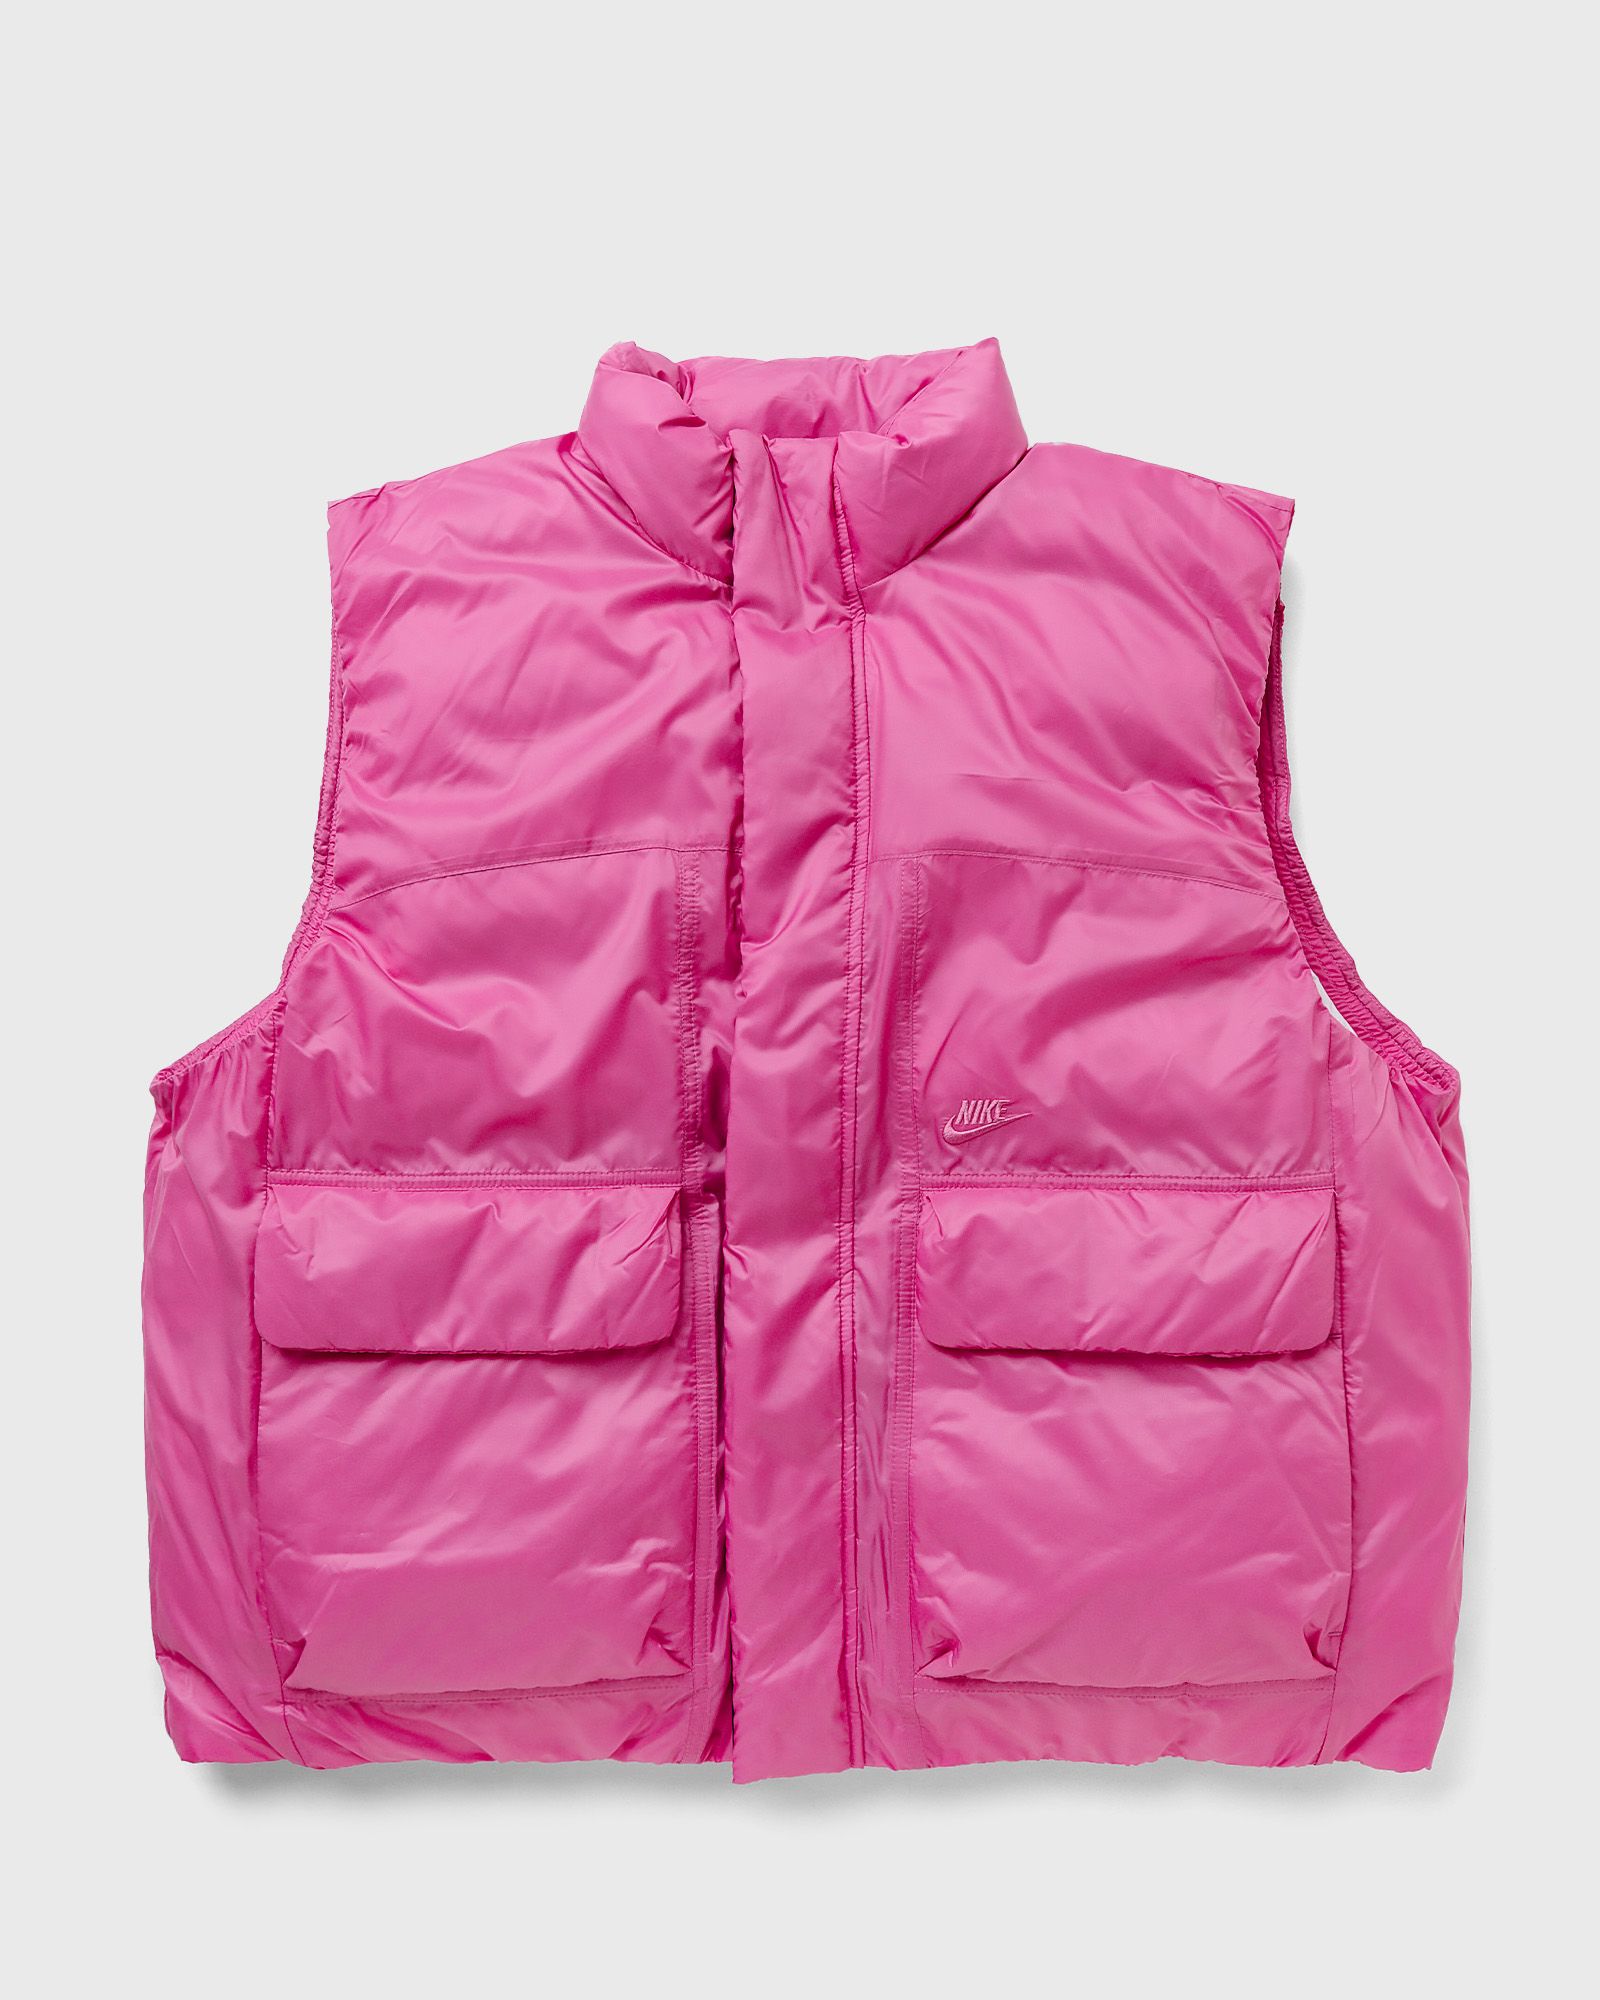 Nike - tech pack tfadv insulated woven vest men vests pink in größe:xxl